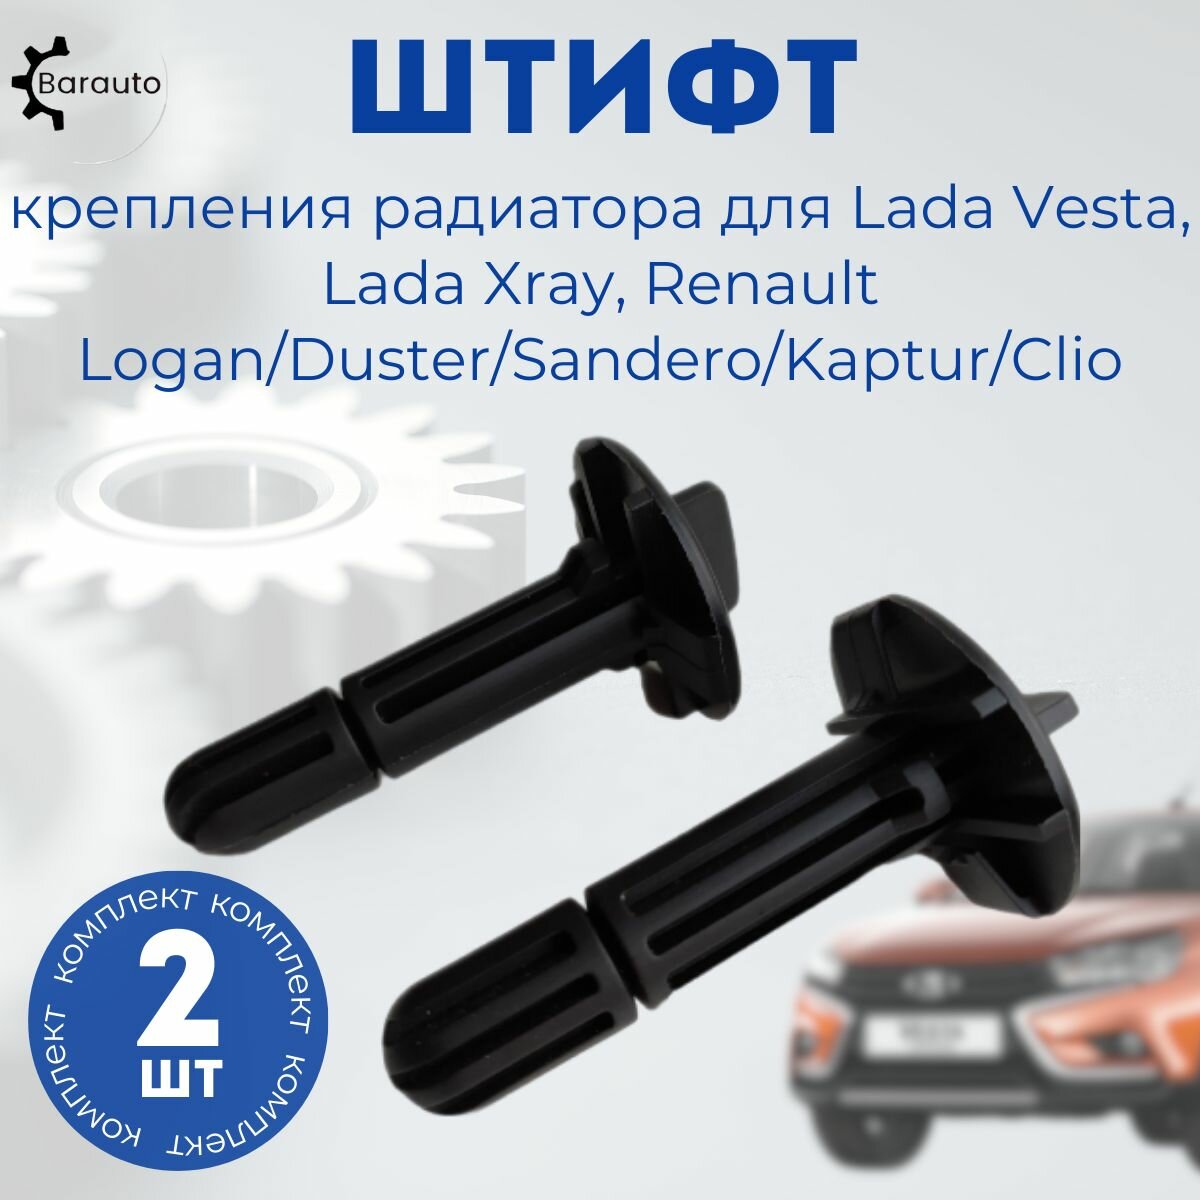 Штифт крепления радиатора, клипса радиатора для Лада Веста Lada Vesta, Лада Иксрей Lada Xray, Renault Logan/Duster/Sandero/Kaptur/Clio